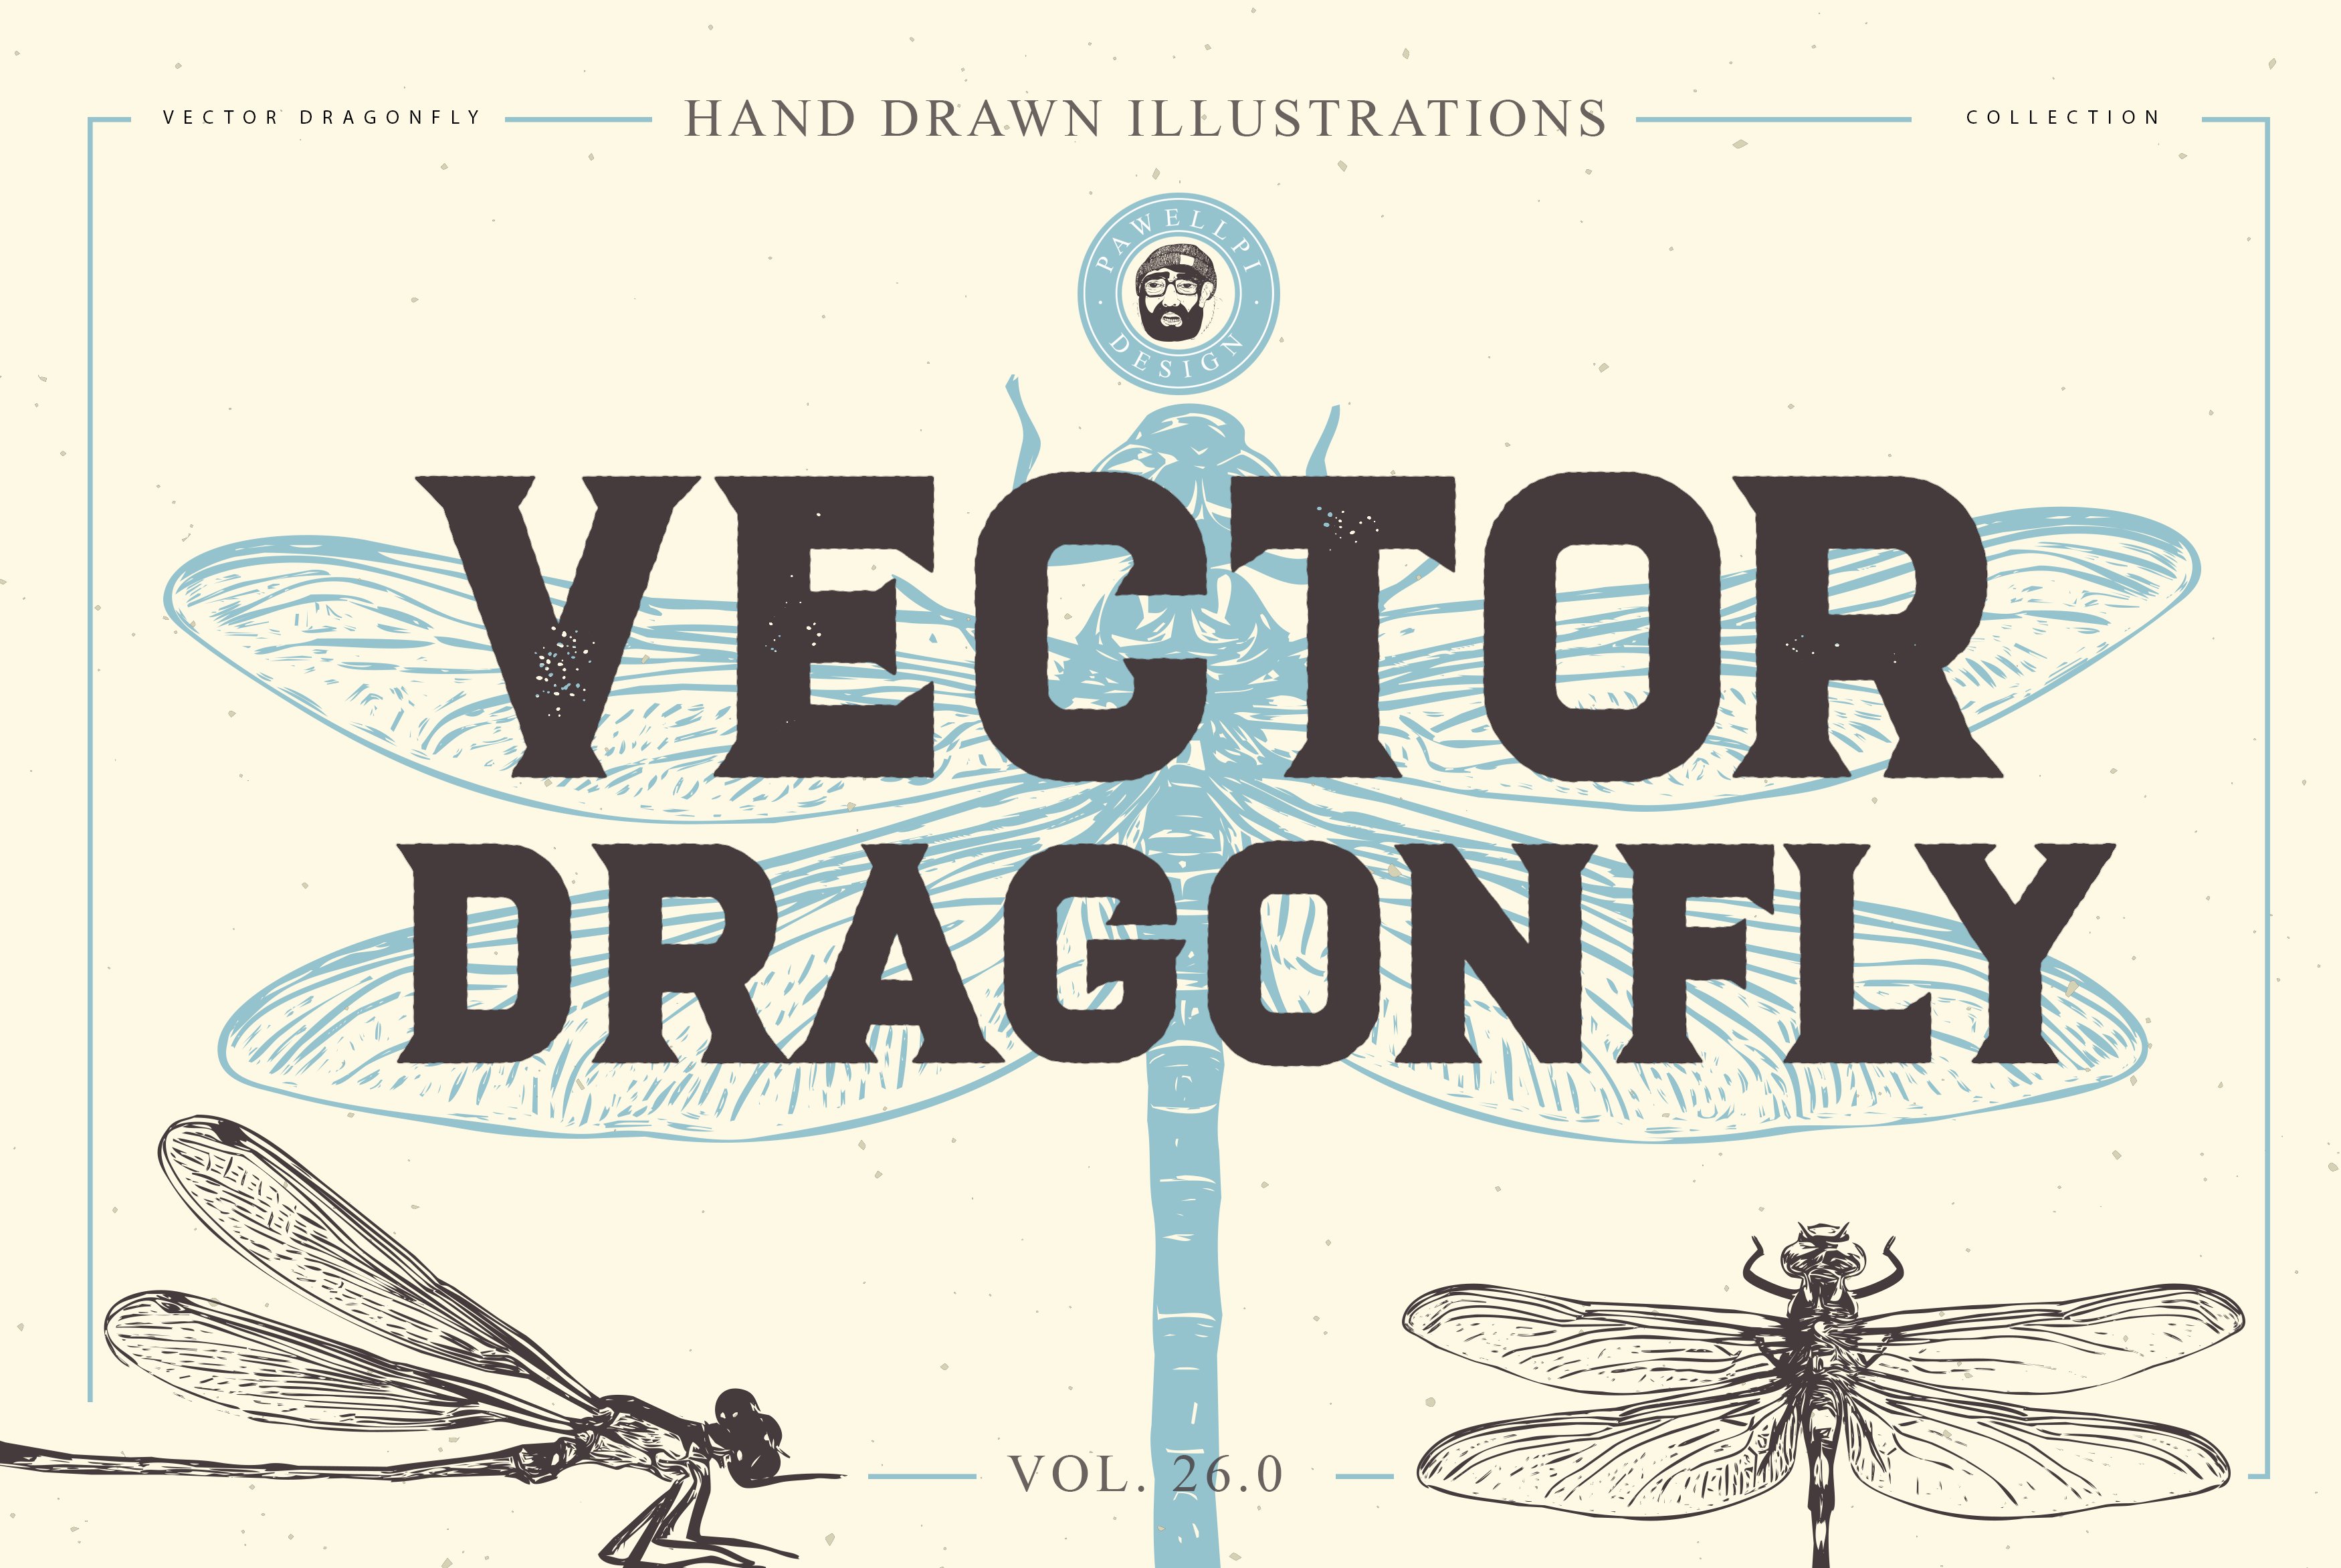 VECTOR DRAGONFLY BUNDLE VOL. 26 cover image.